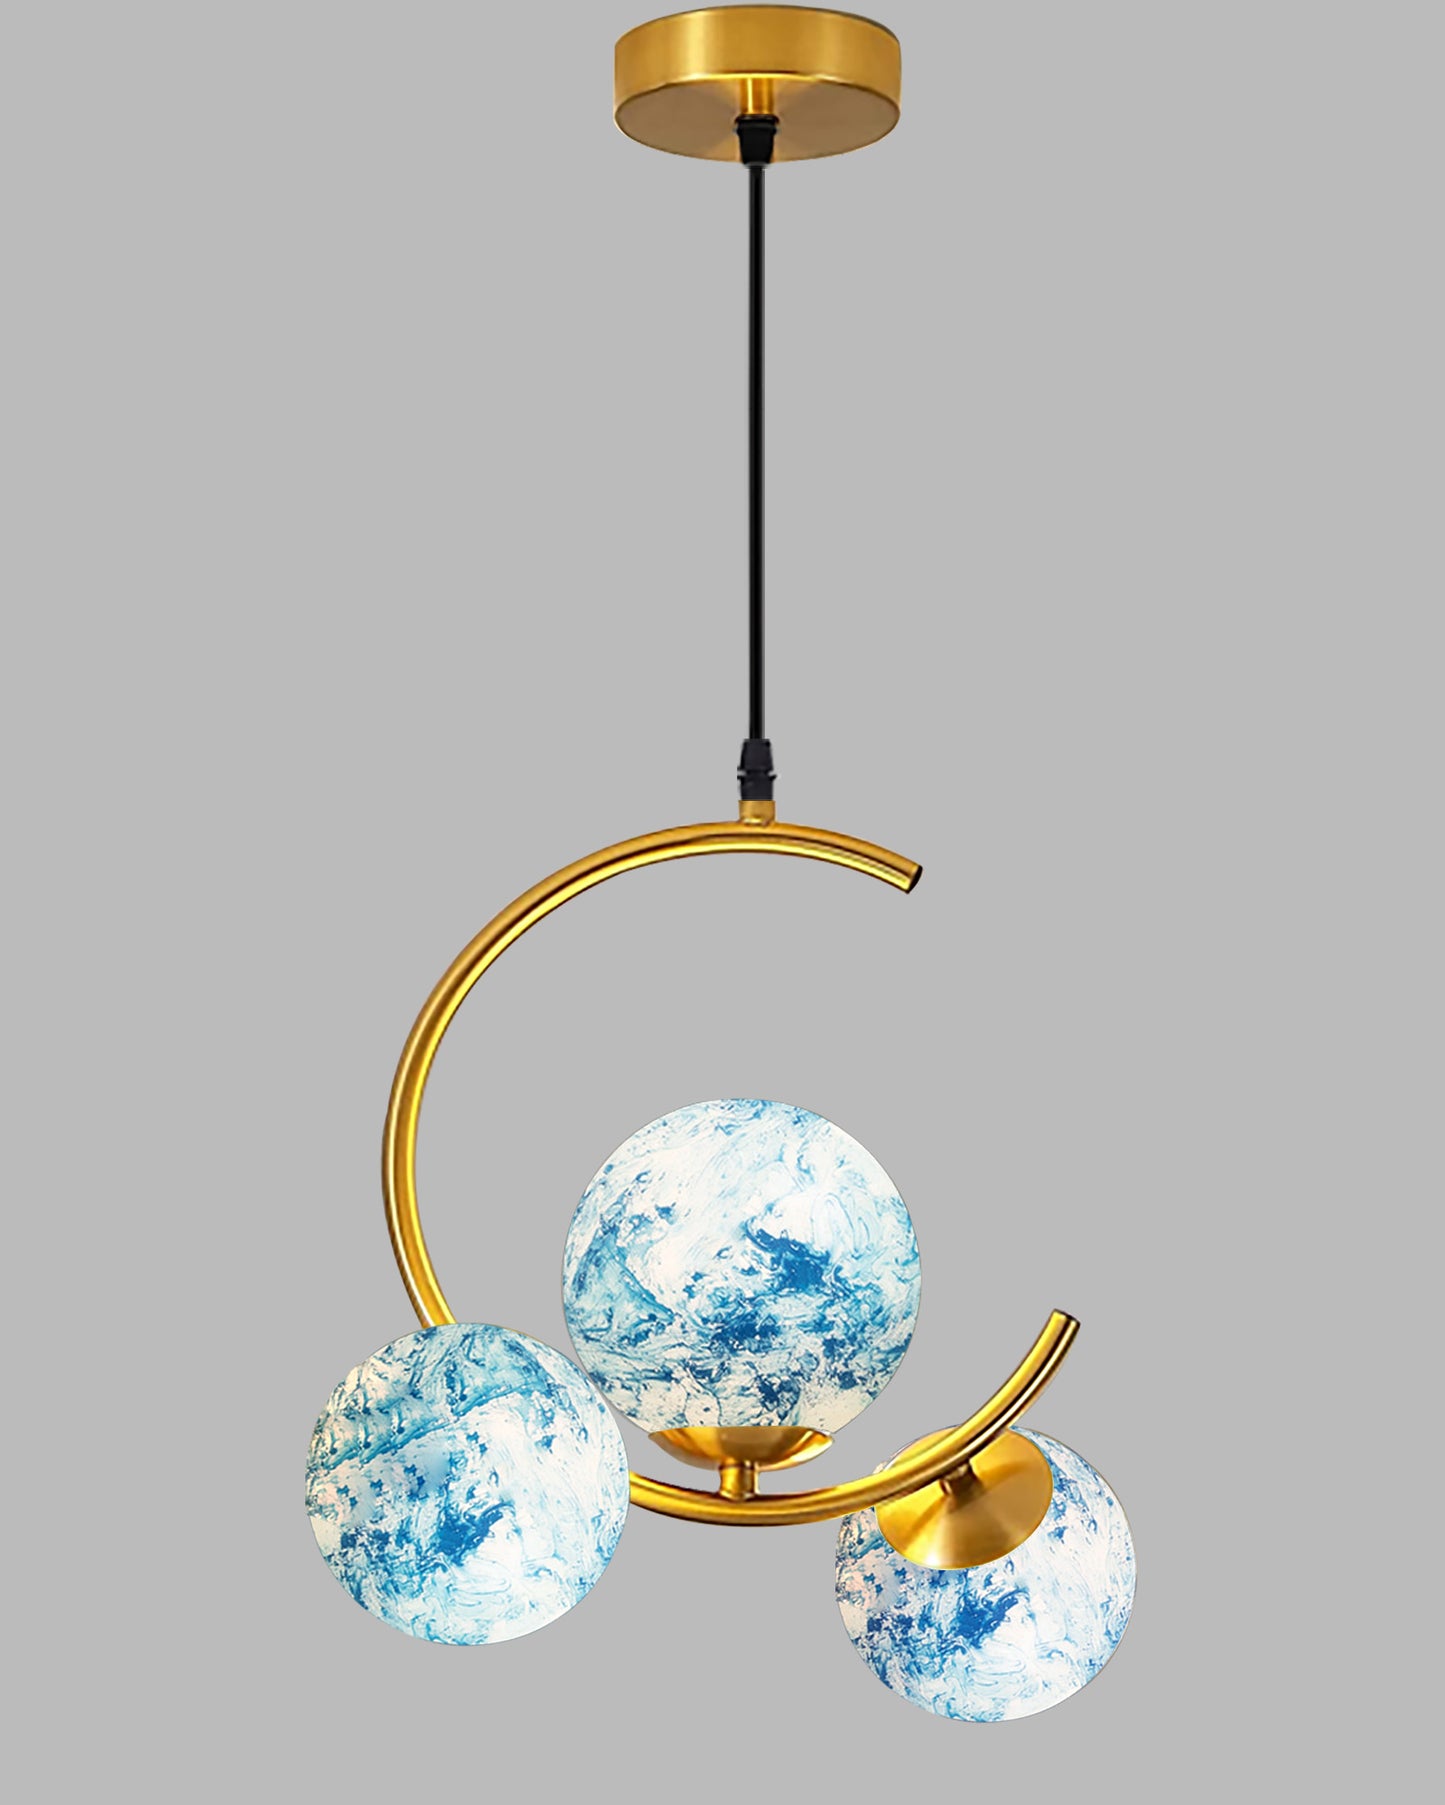 3 Globe Light Chandelier Hanging Light Gold Modern Ceiling Pendant Lamp Adjustable Cord Ceiling Light for Bedroom Living Dining Room